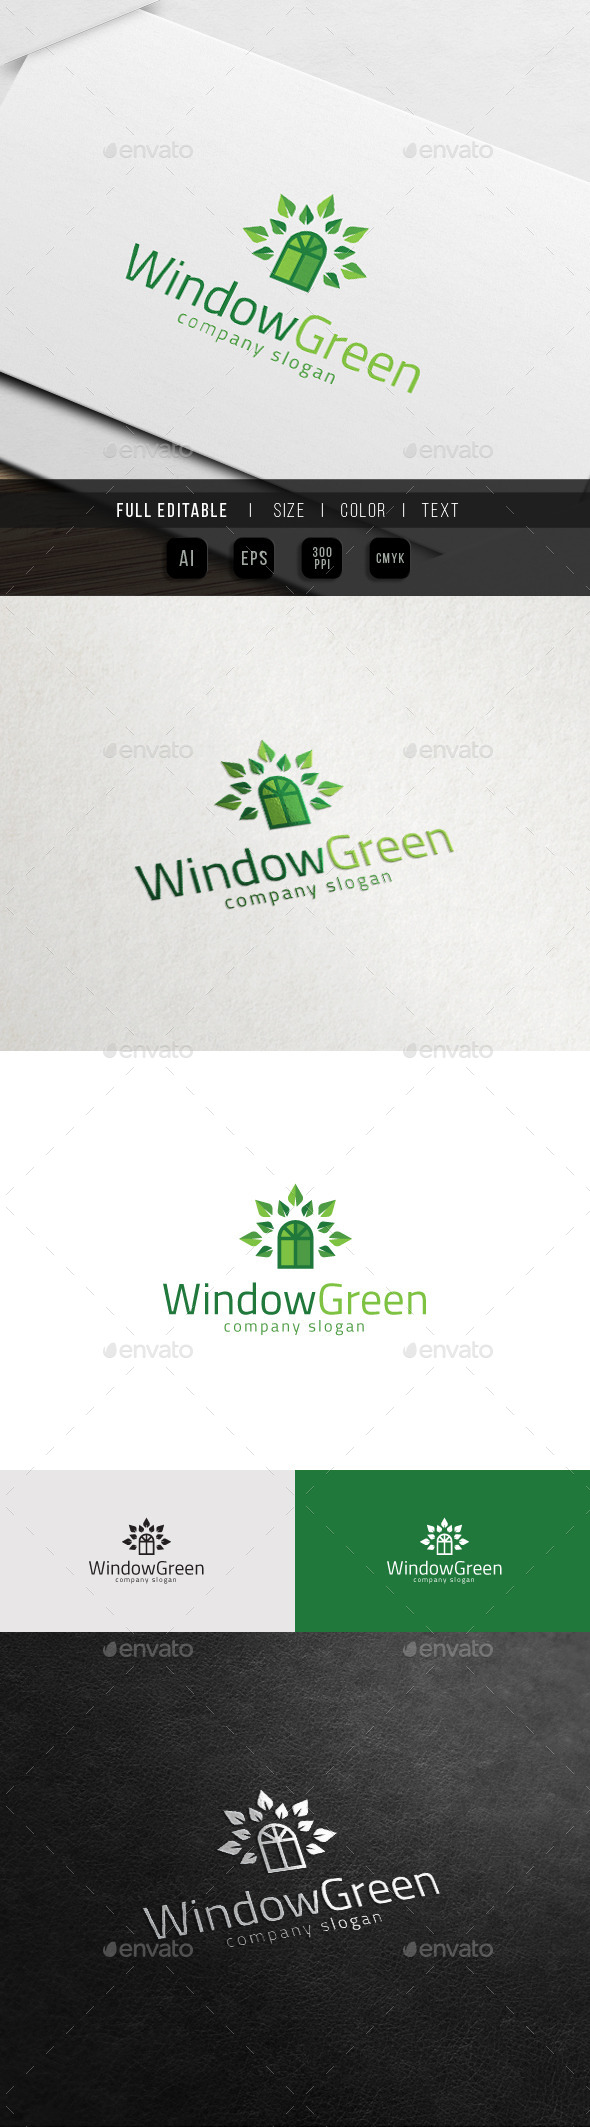 Window Green - Eco Property - Home Charity Logo